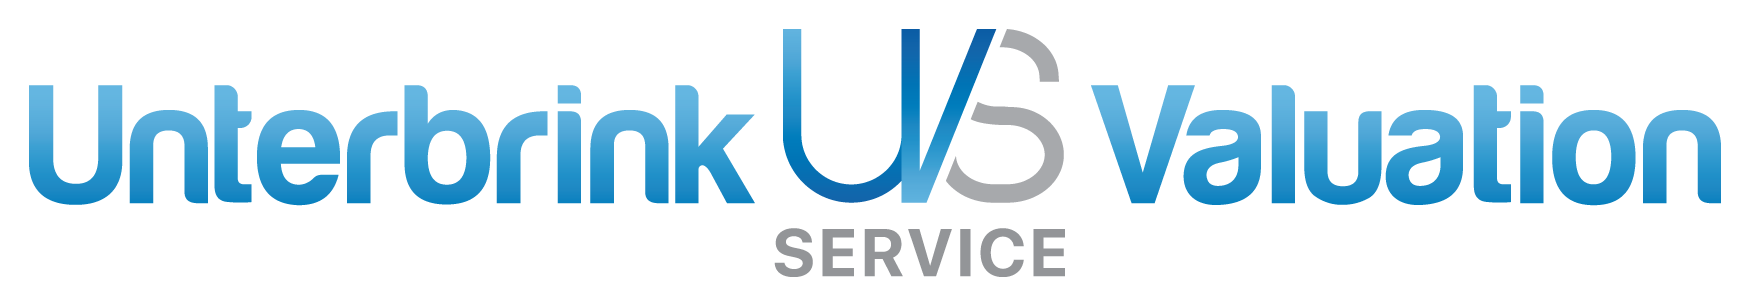 Unterbrink Valuation Service Logo